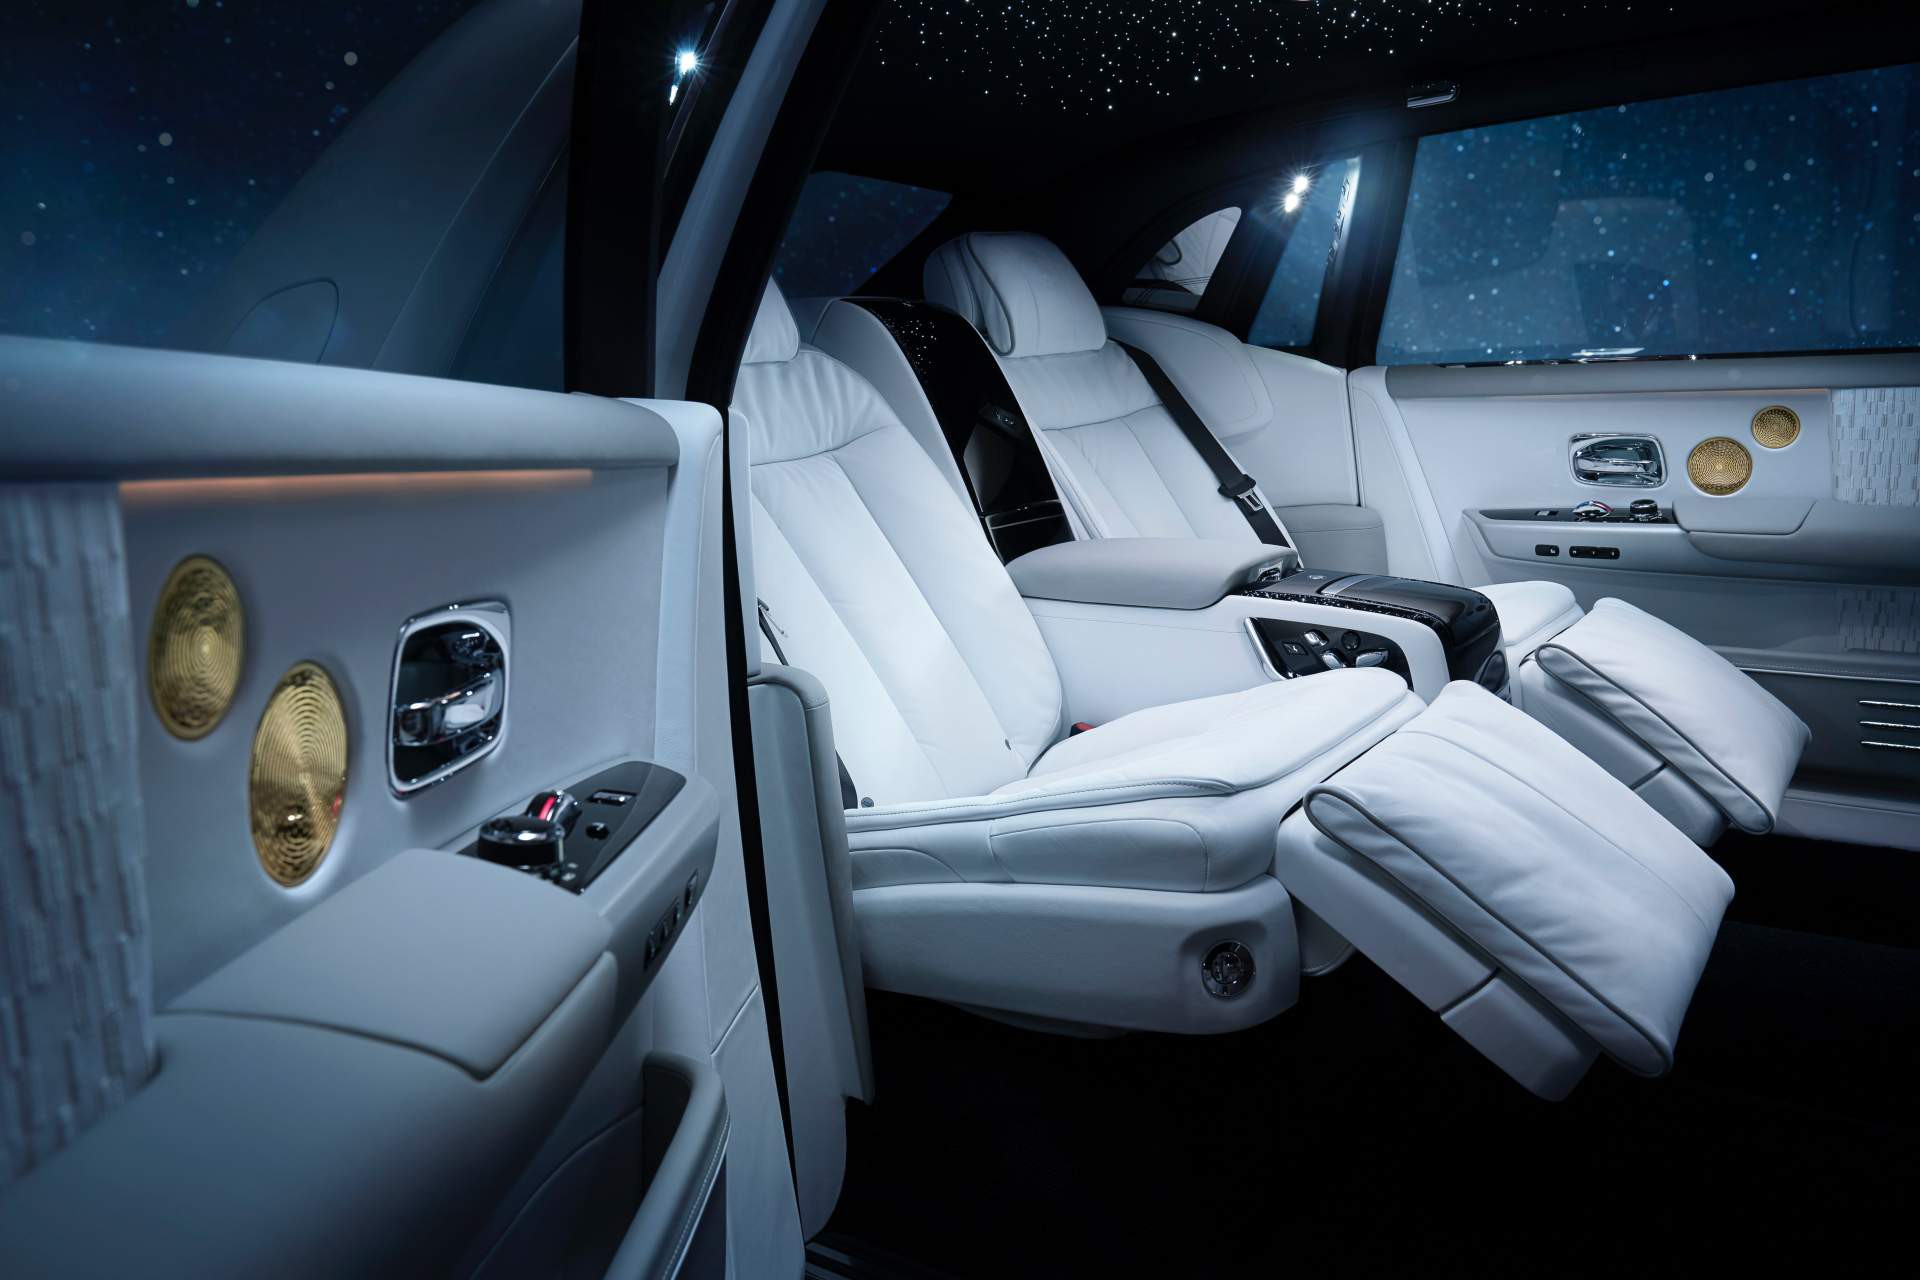 White Rolls Royce Ghost  Lifestyle Chauffeur  LifestyleChauffer